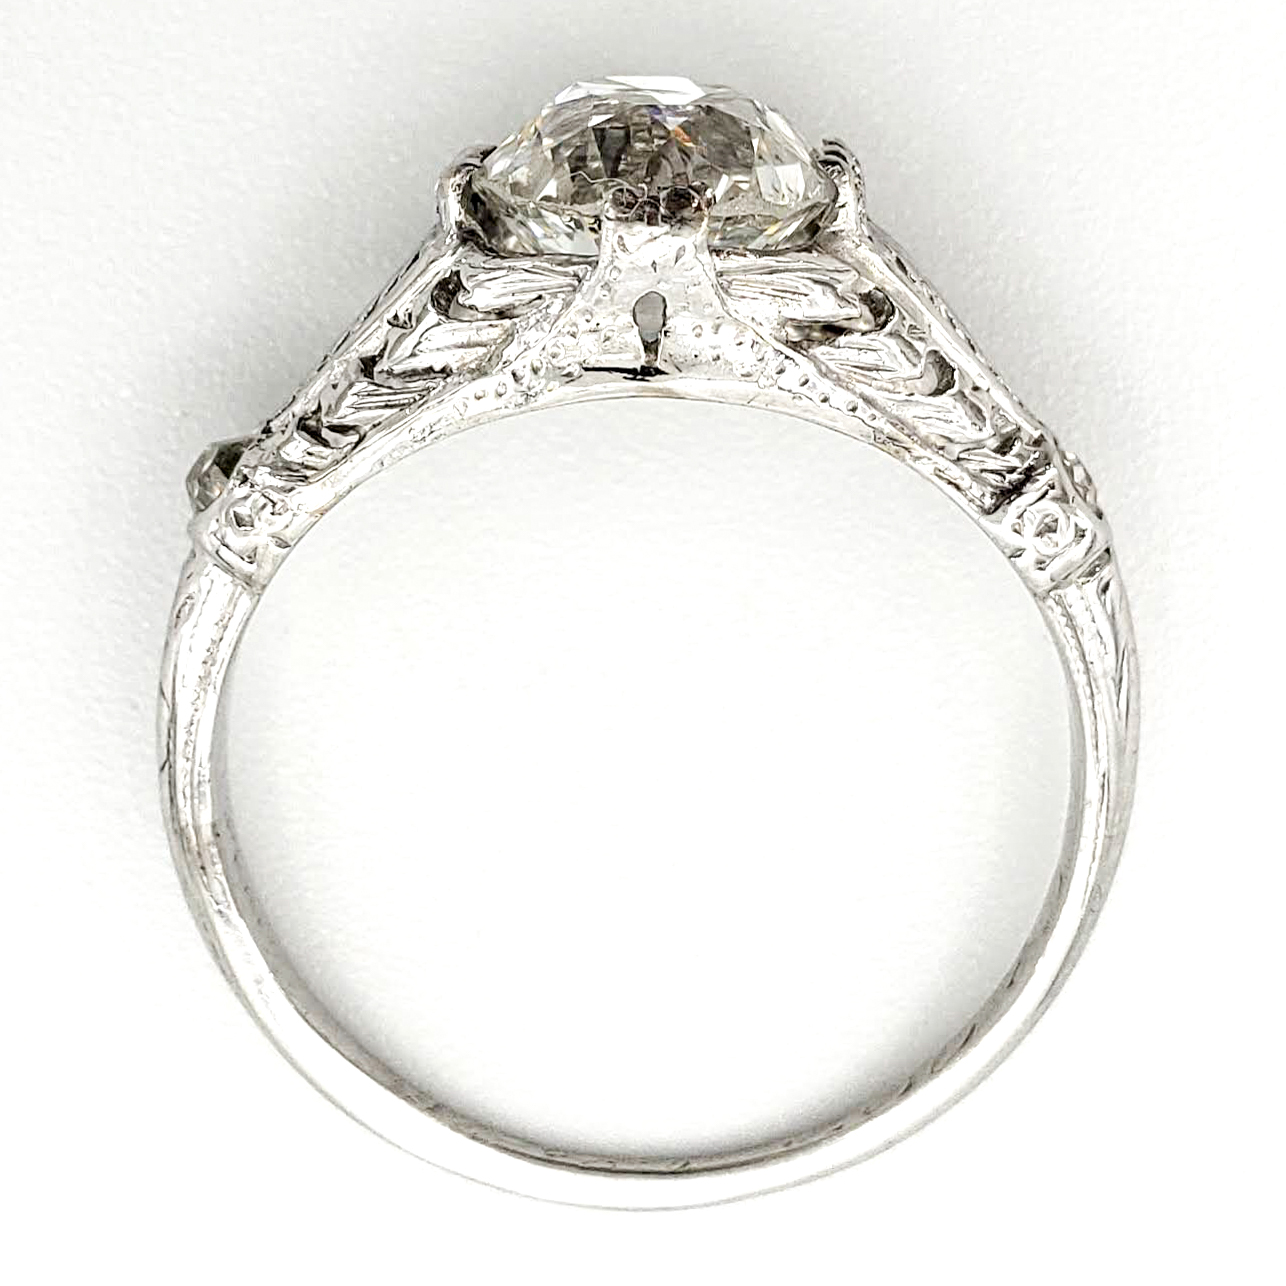 Vintage Platinum Engagement Ring With 1.42 Carat Old European Cut Diamond EGL – H SI2